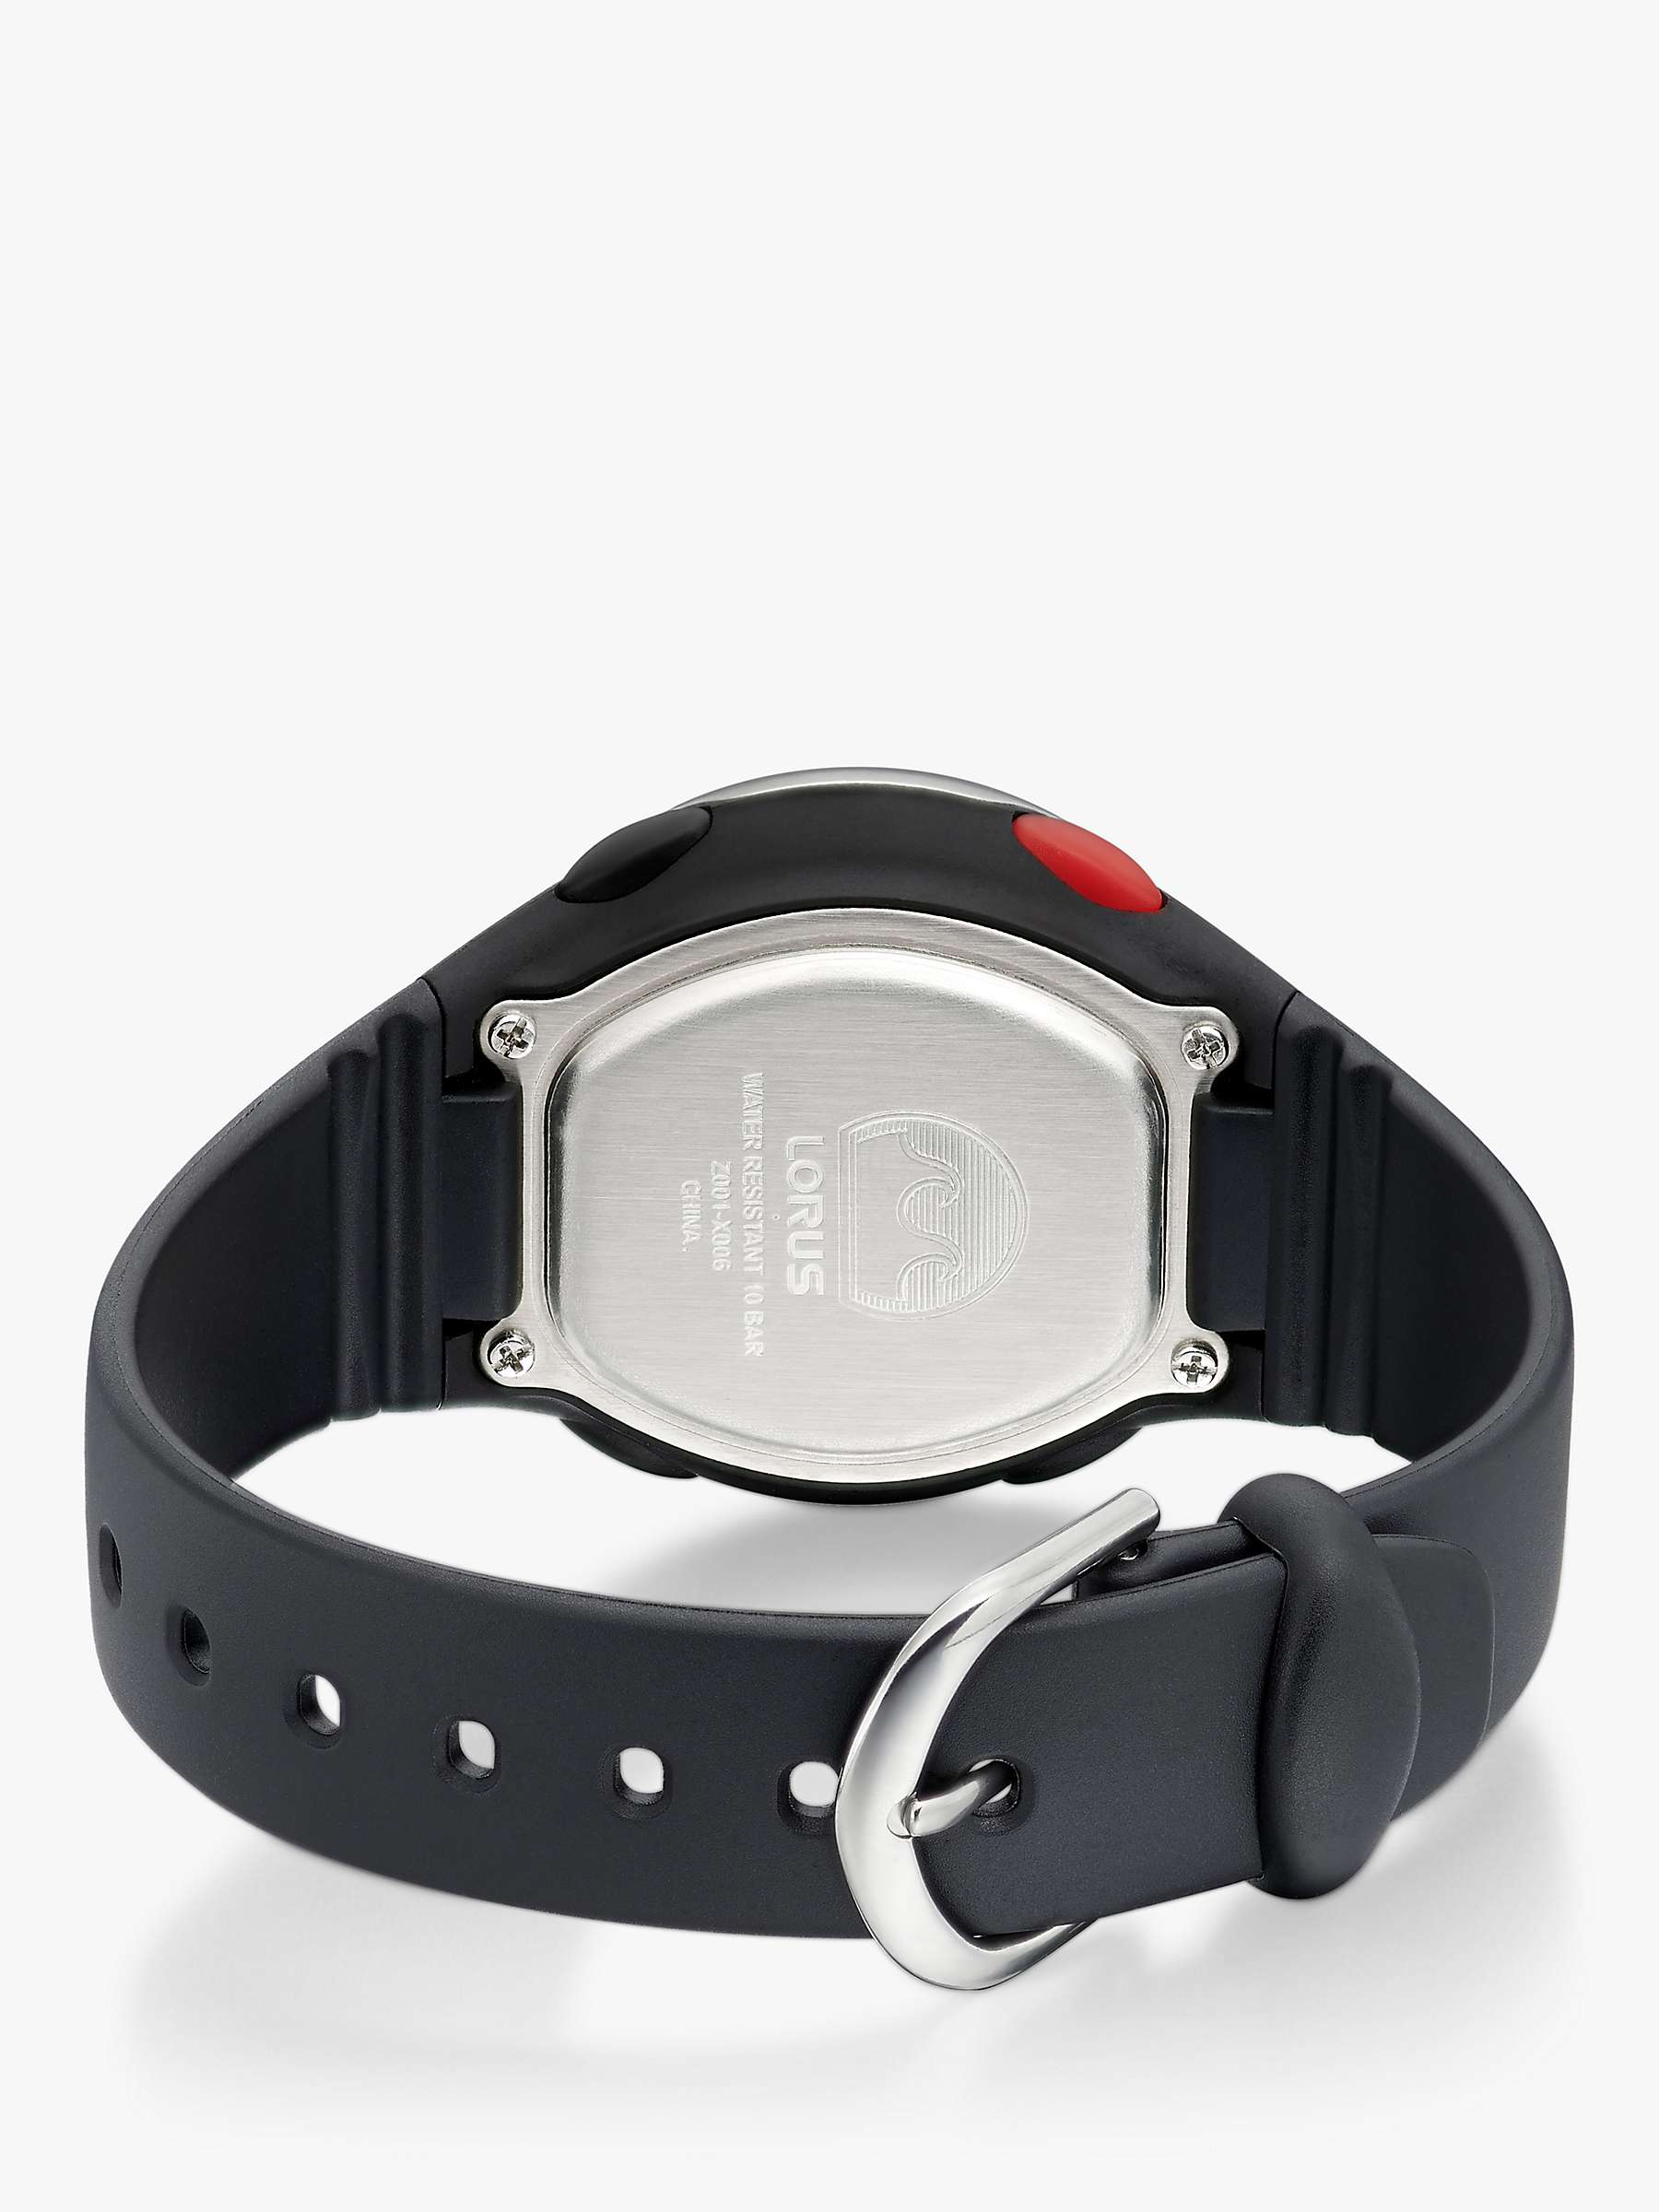 Buy Lorus Unisex Digital Silicone Strap Watch Online at johnlewis.com